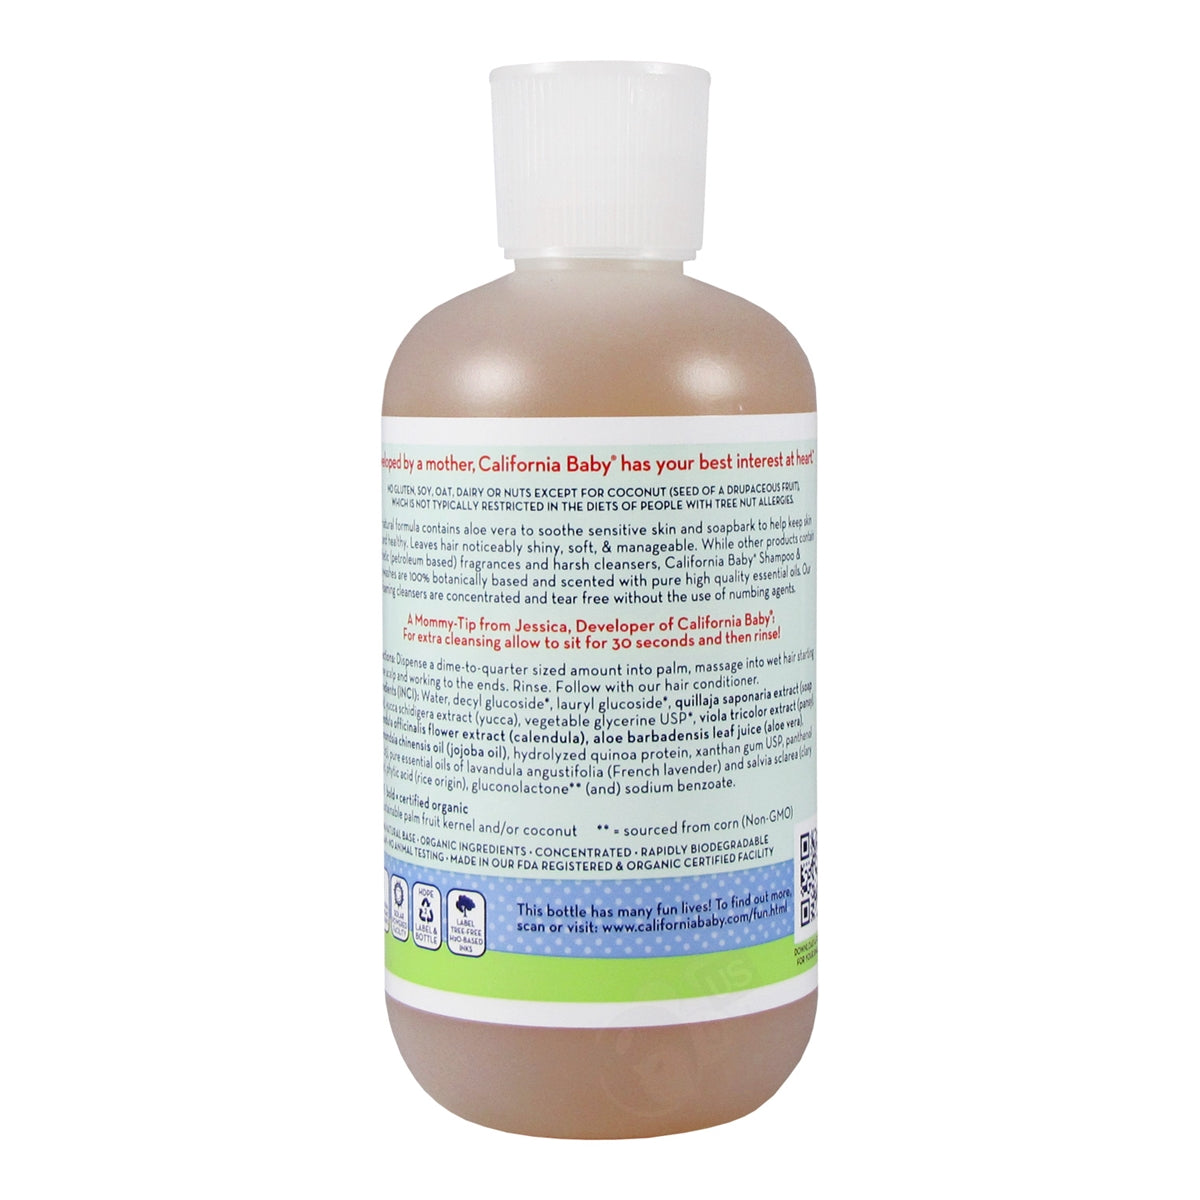 Calming Shampoo & Bodywash - 8.5 oz. (California Baby)